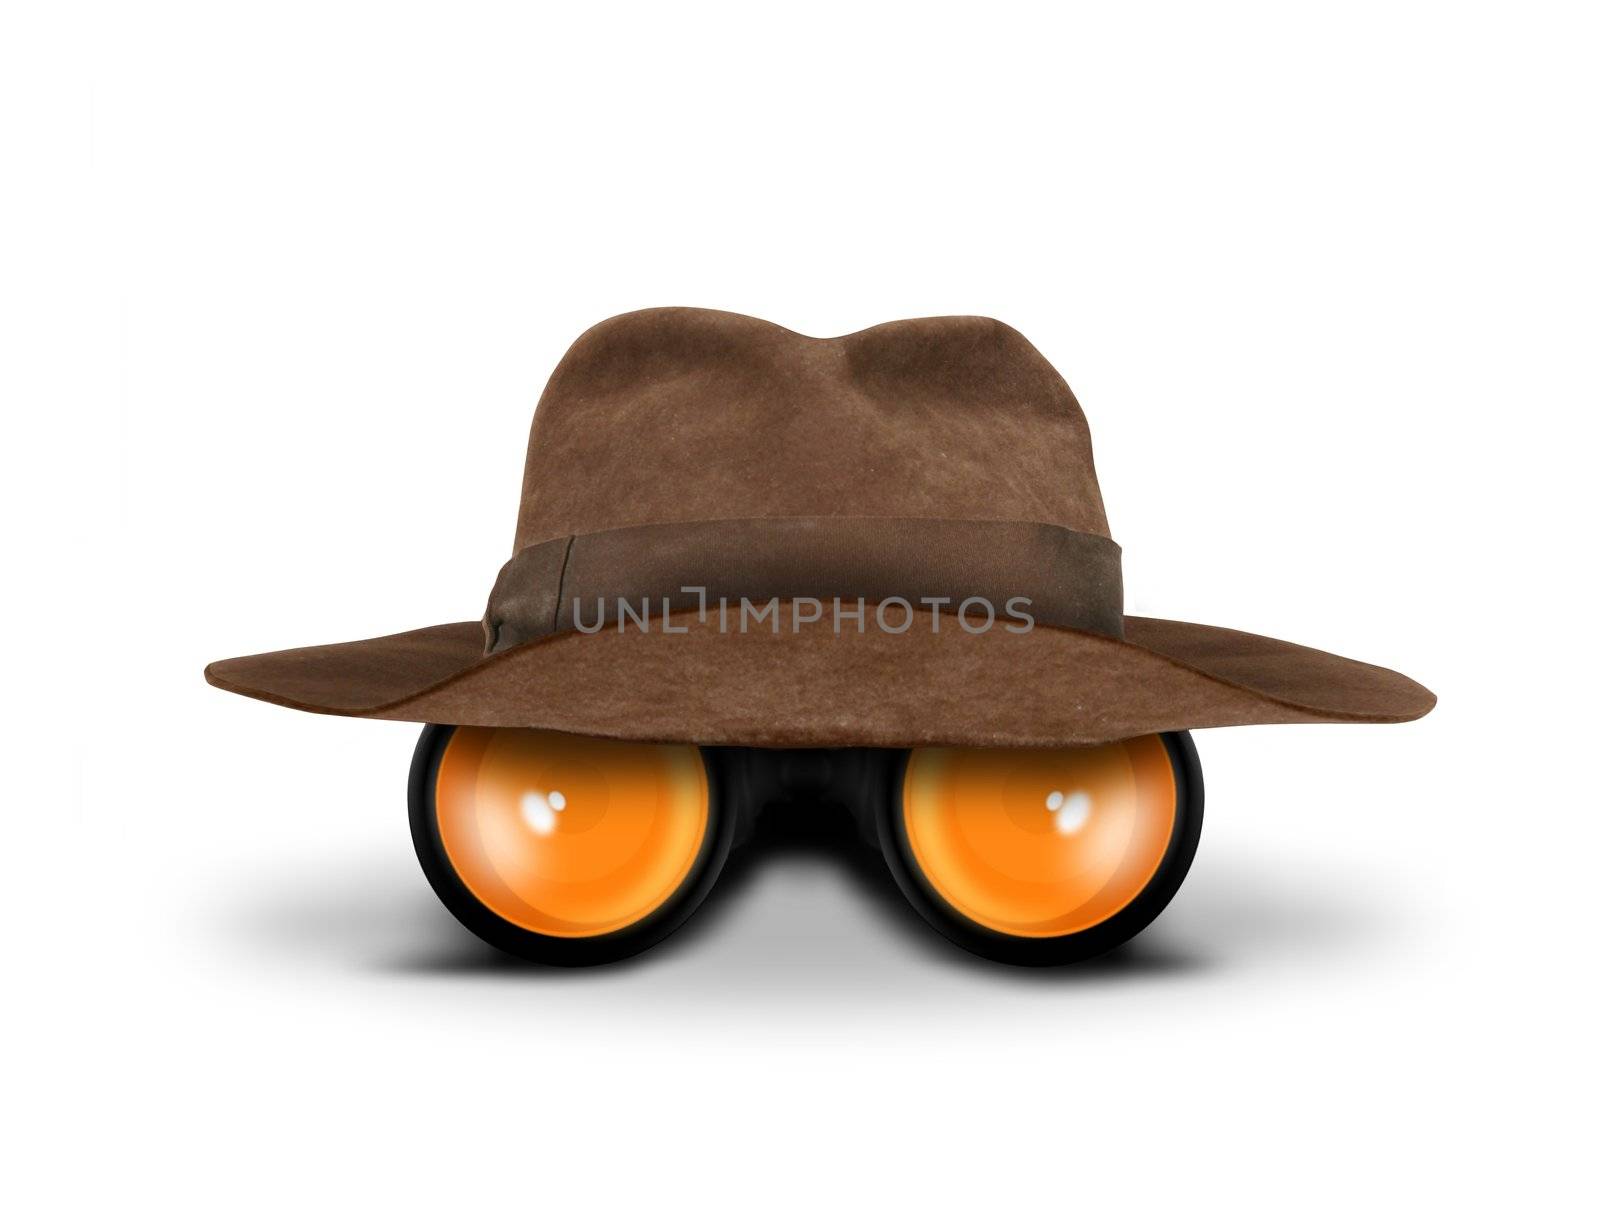 Hunters hat and binocular